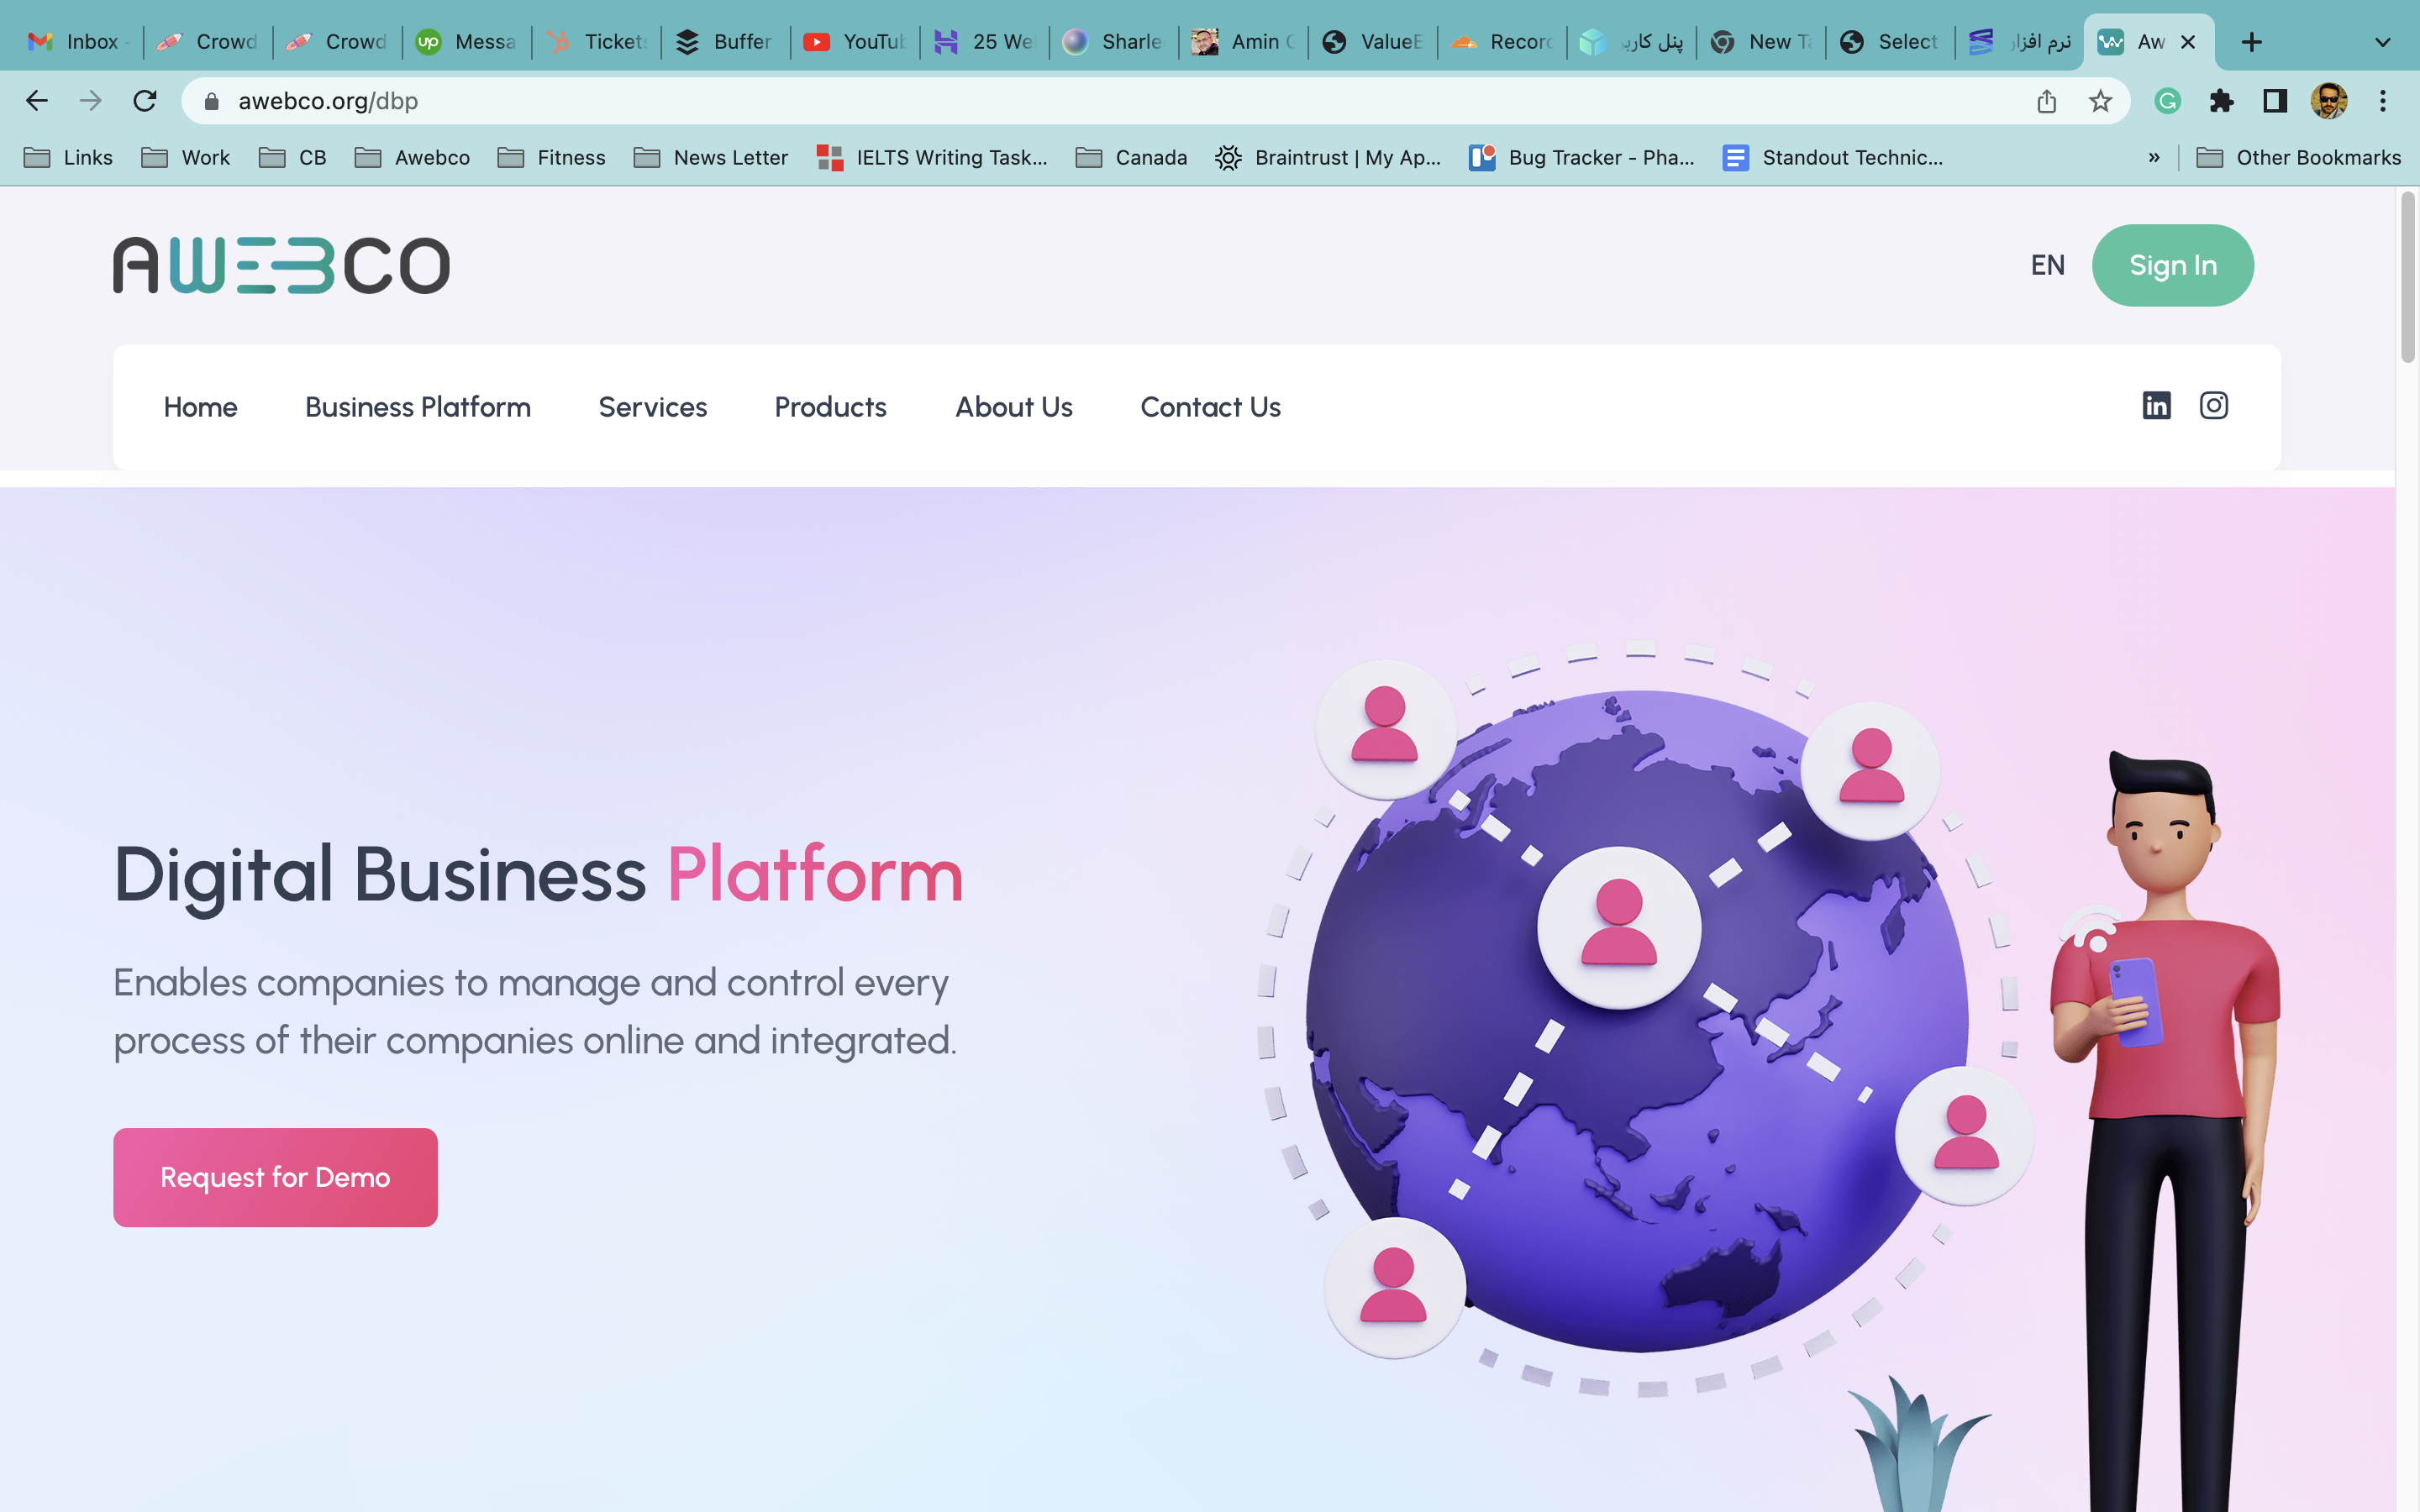 Creating a Digital Business Platform: AWEBCO